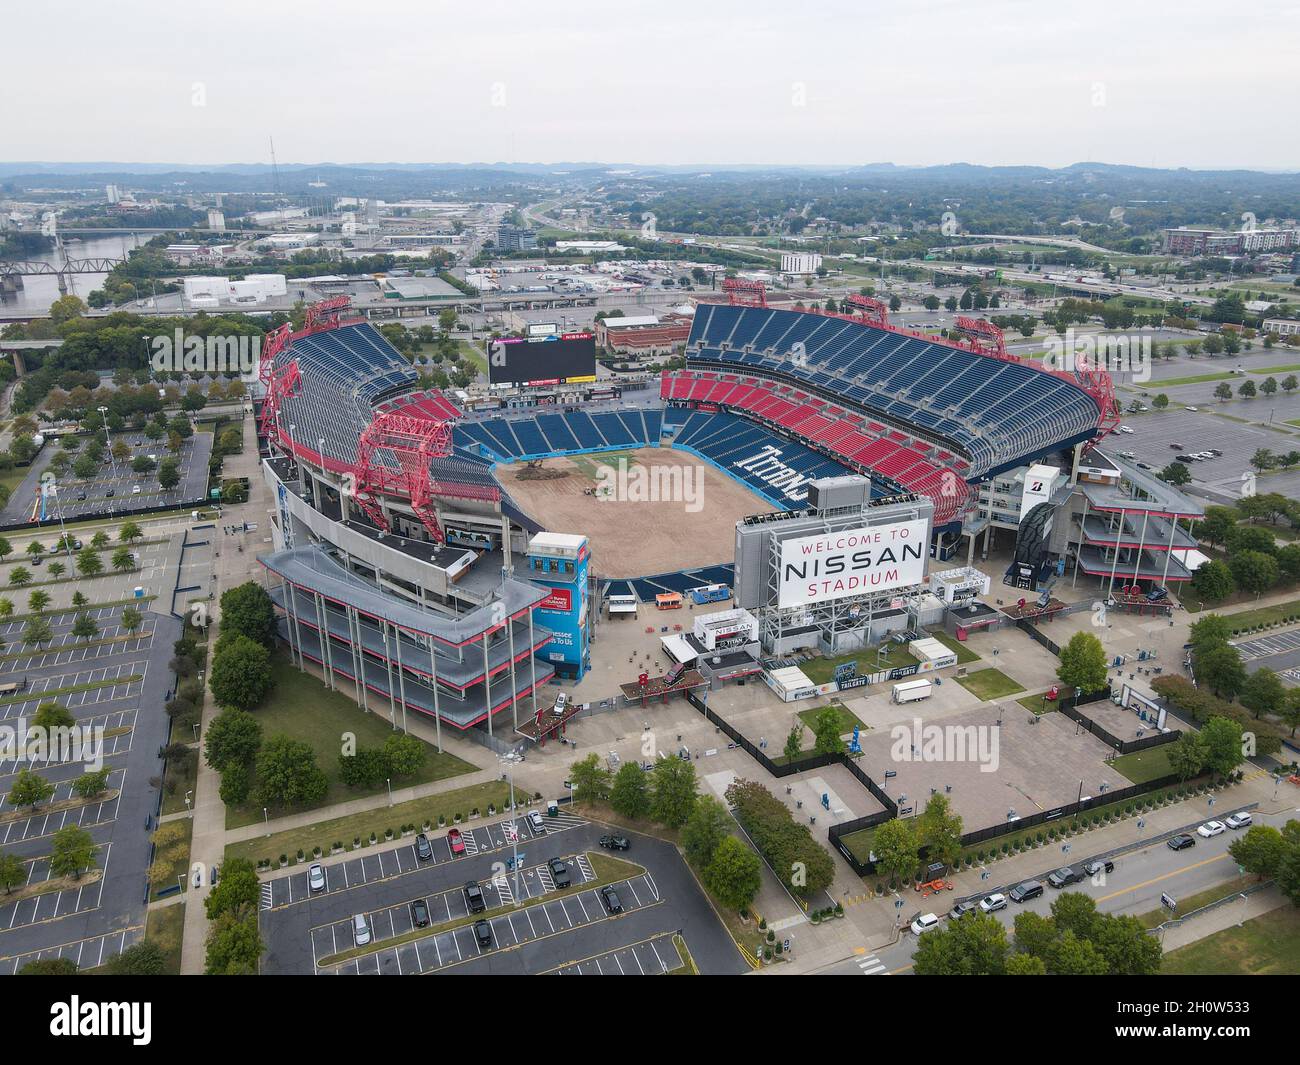 Tennessee Titans - Nissan Stadium